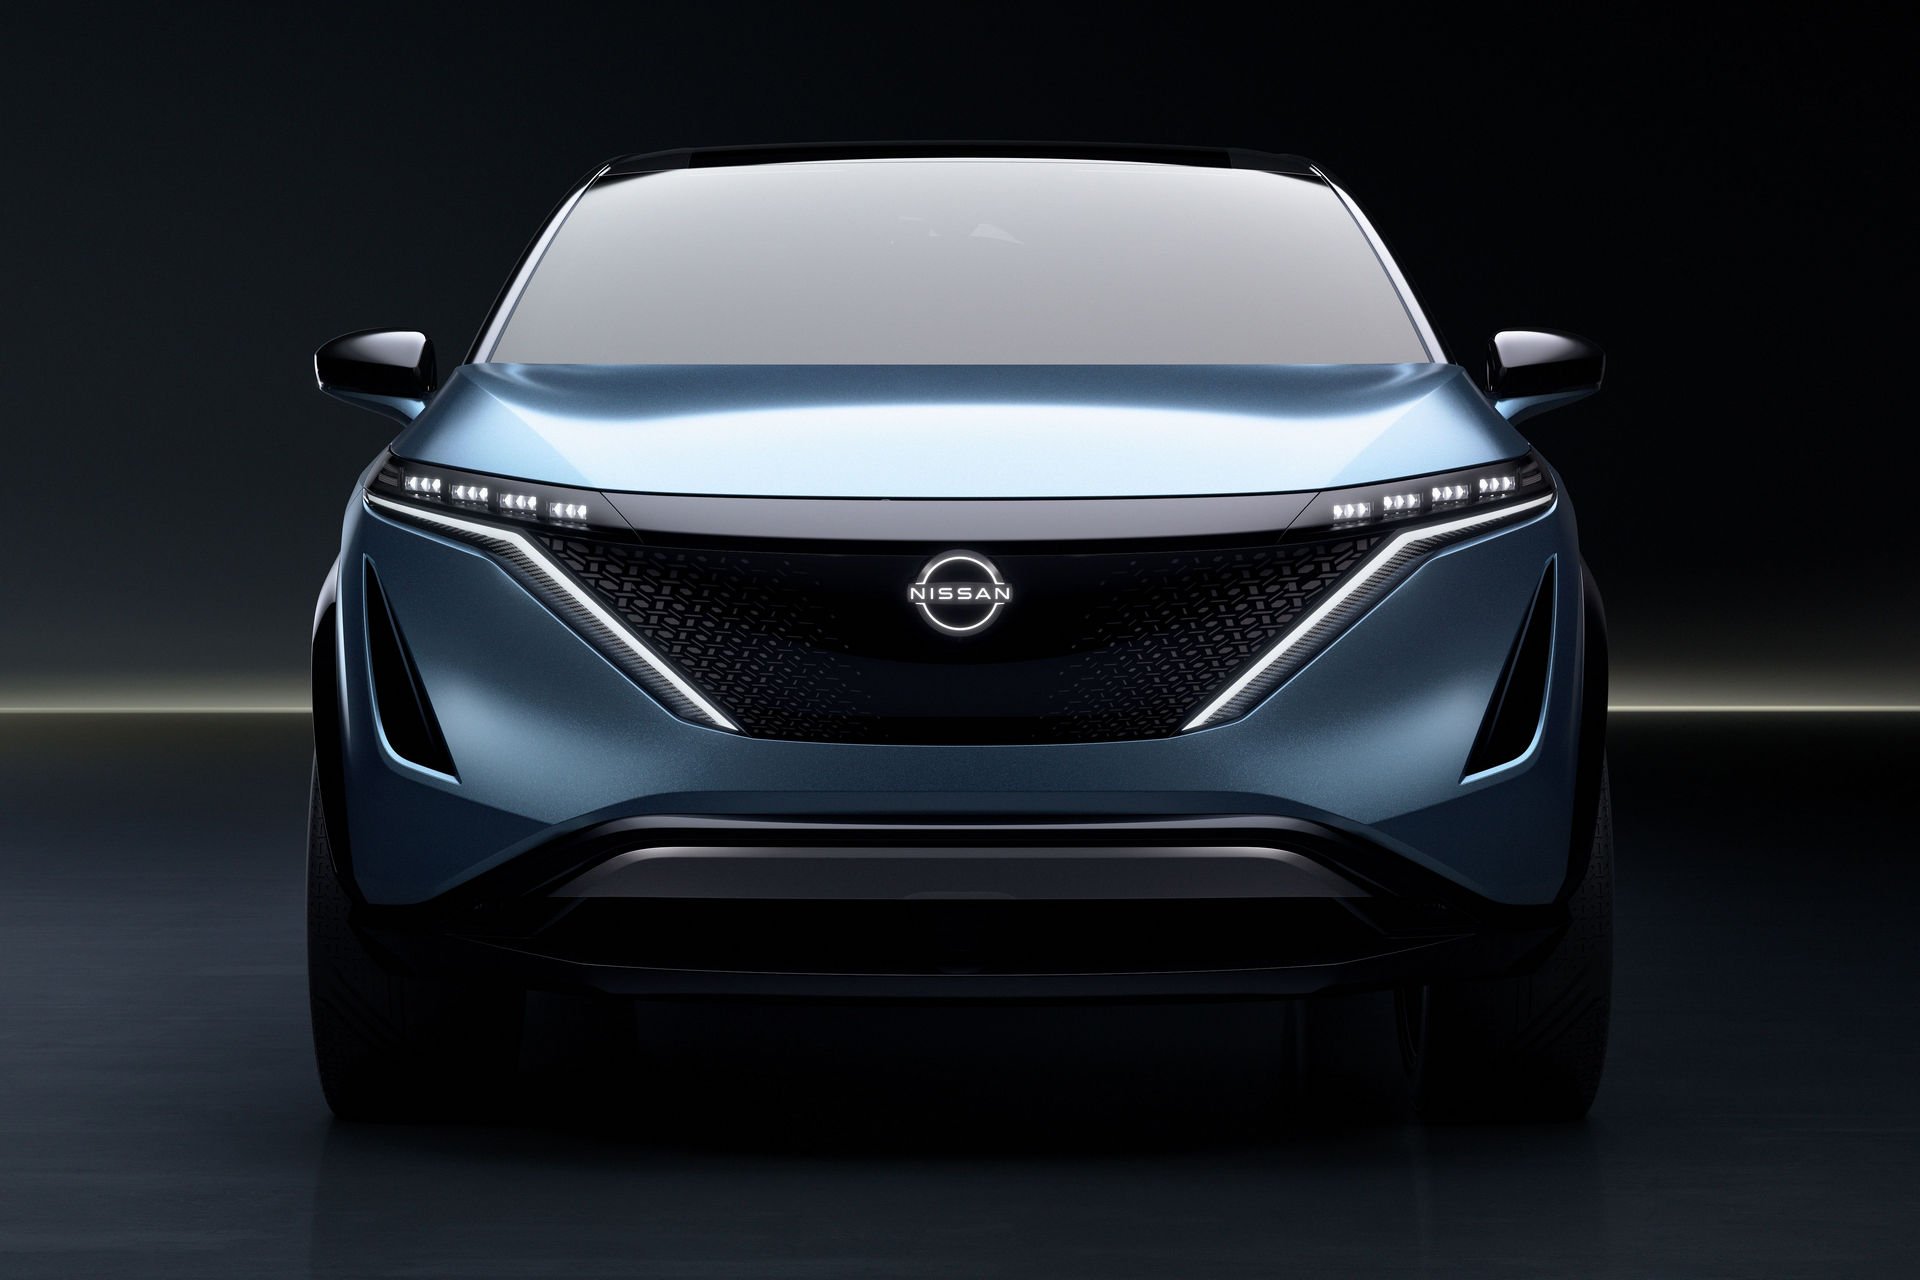 Nissan Ariya Concept, 2019